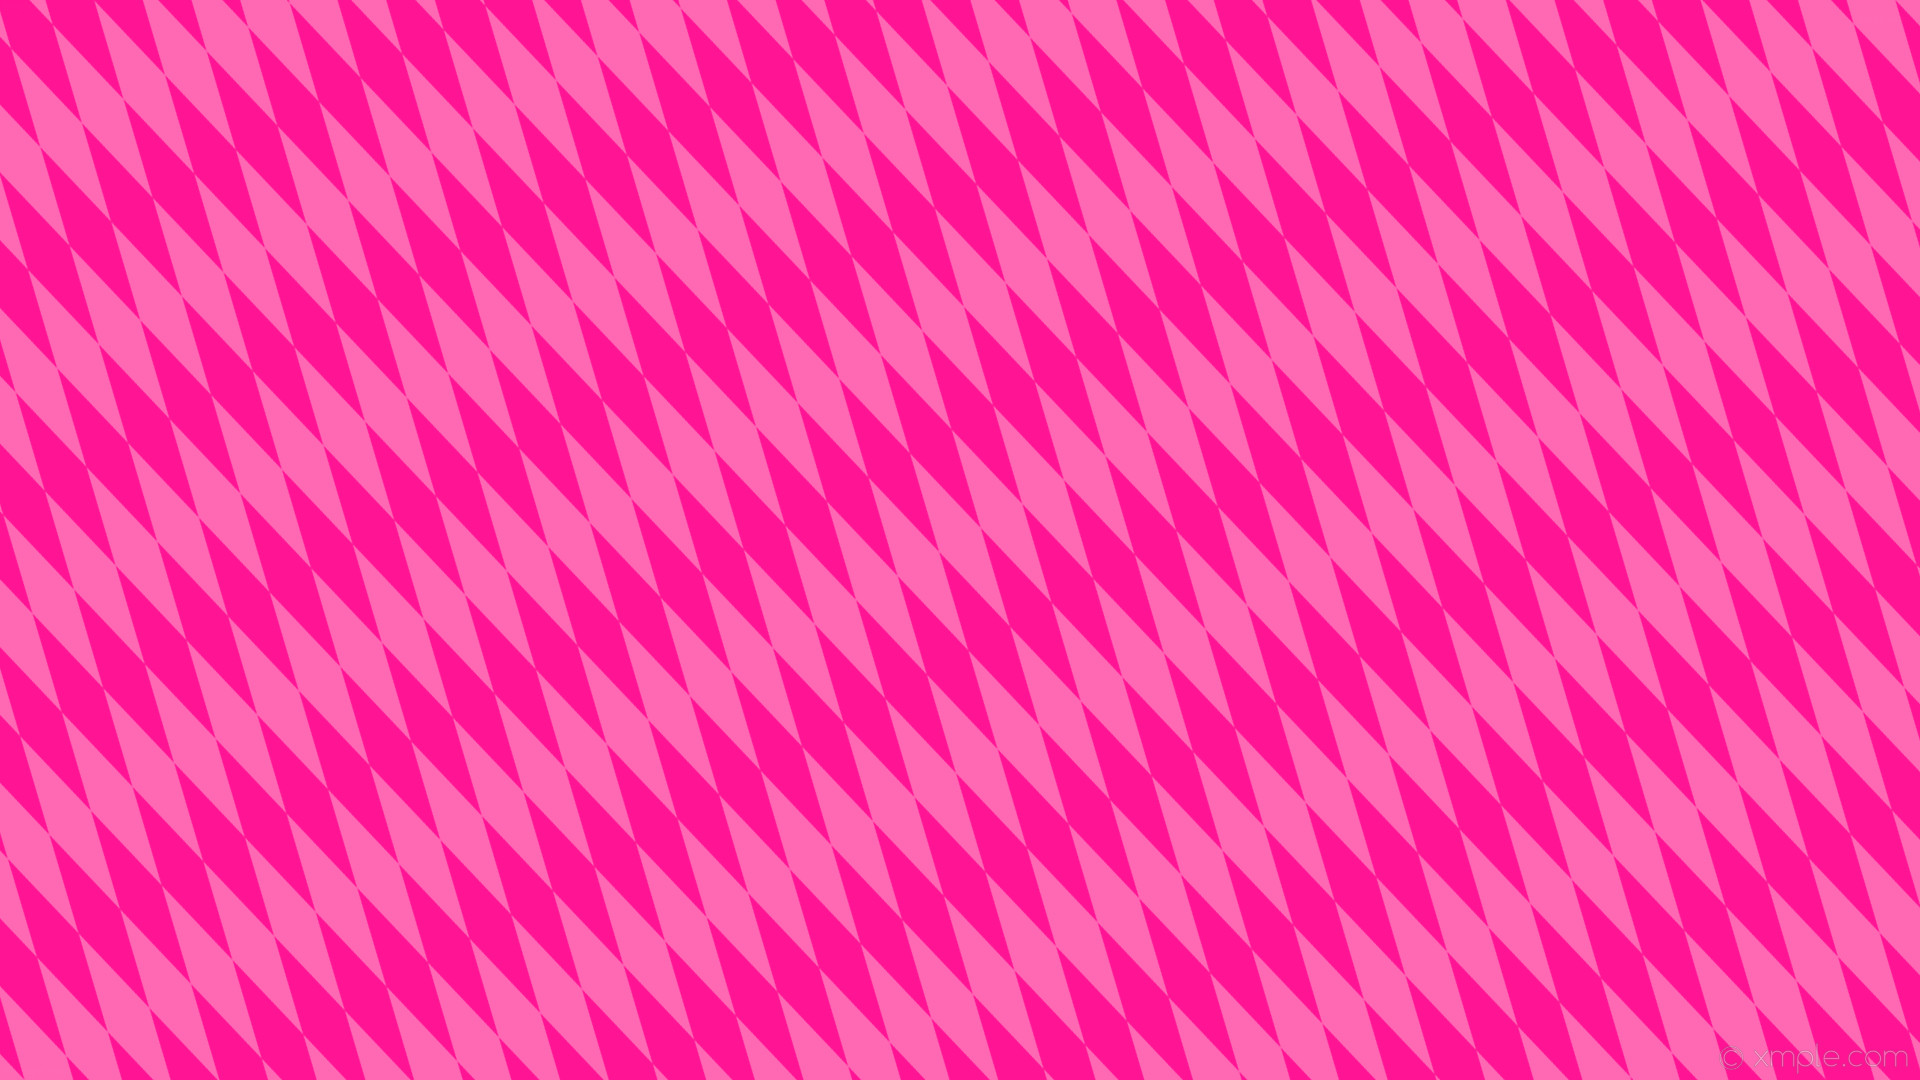 1920x1080 wallpaper pink diamond lozenge rhombus hot pink deep pink #ff69b4 #ff1493  120Â° 200px